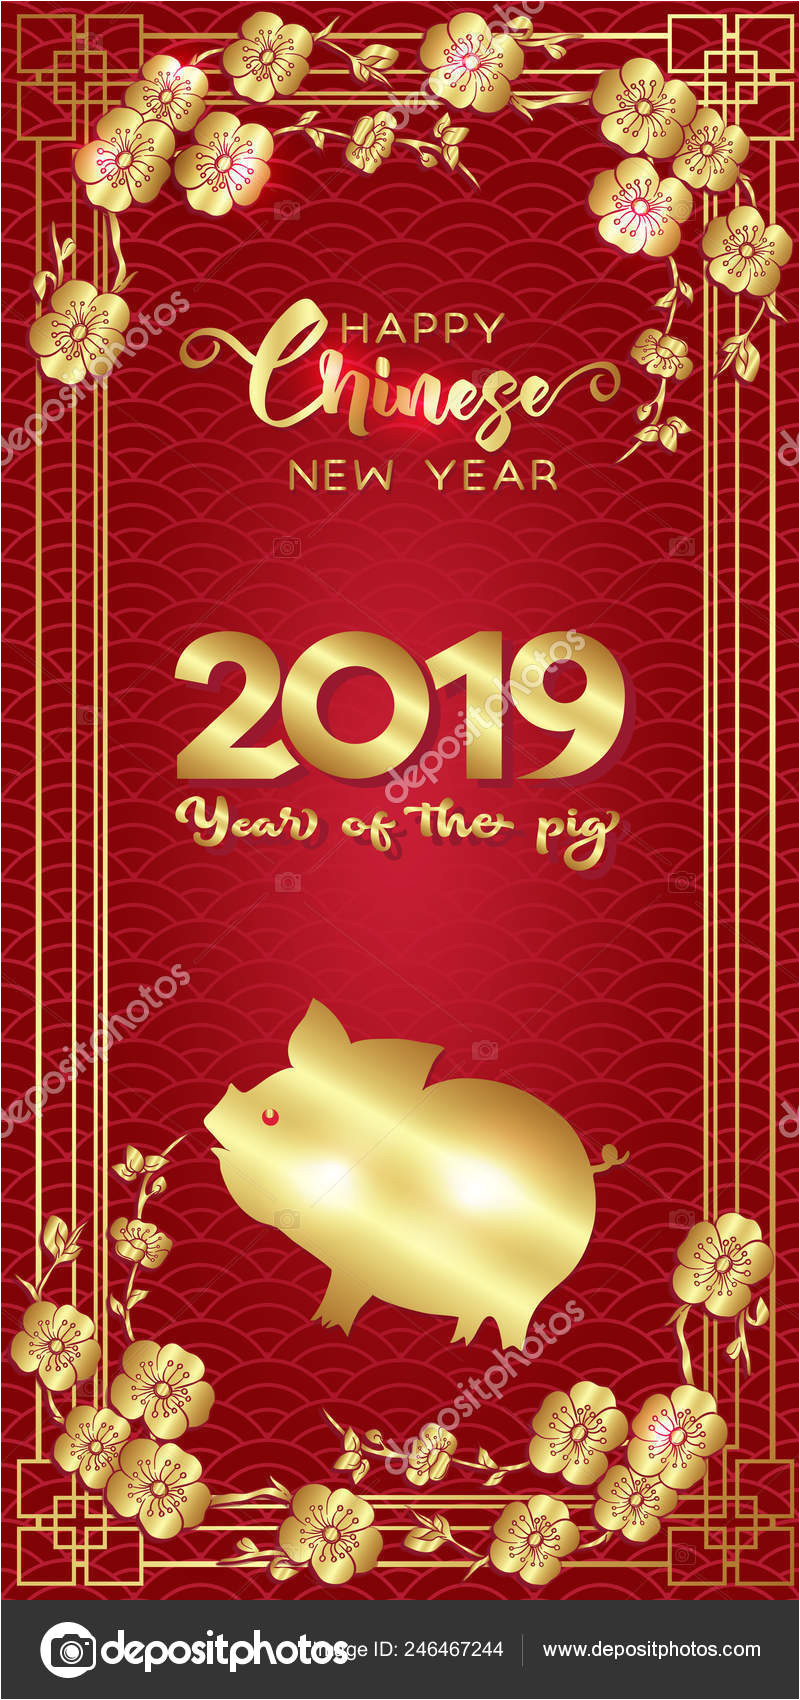 depositphotos 246467244 stock illustration 2019 chinese new year year jpg